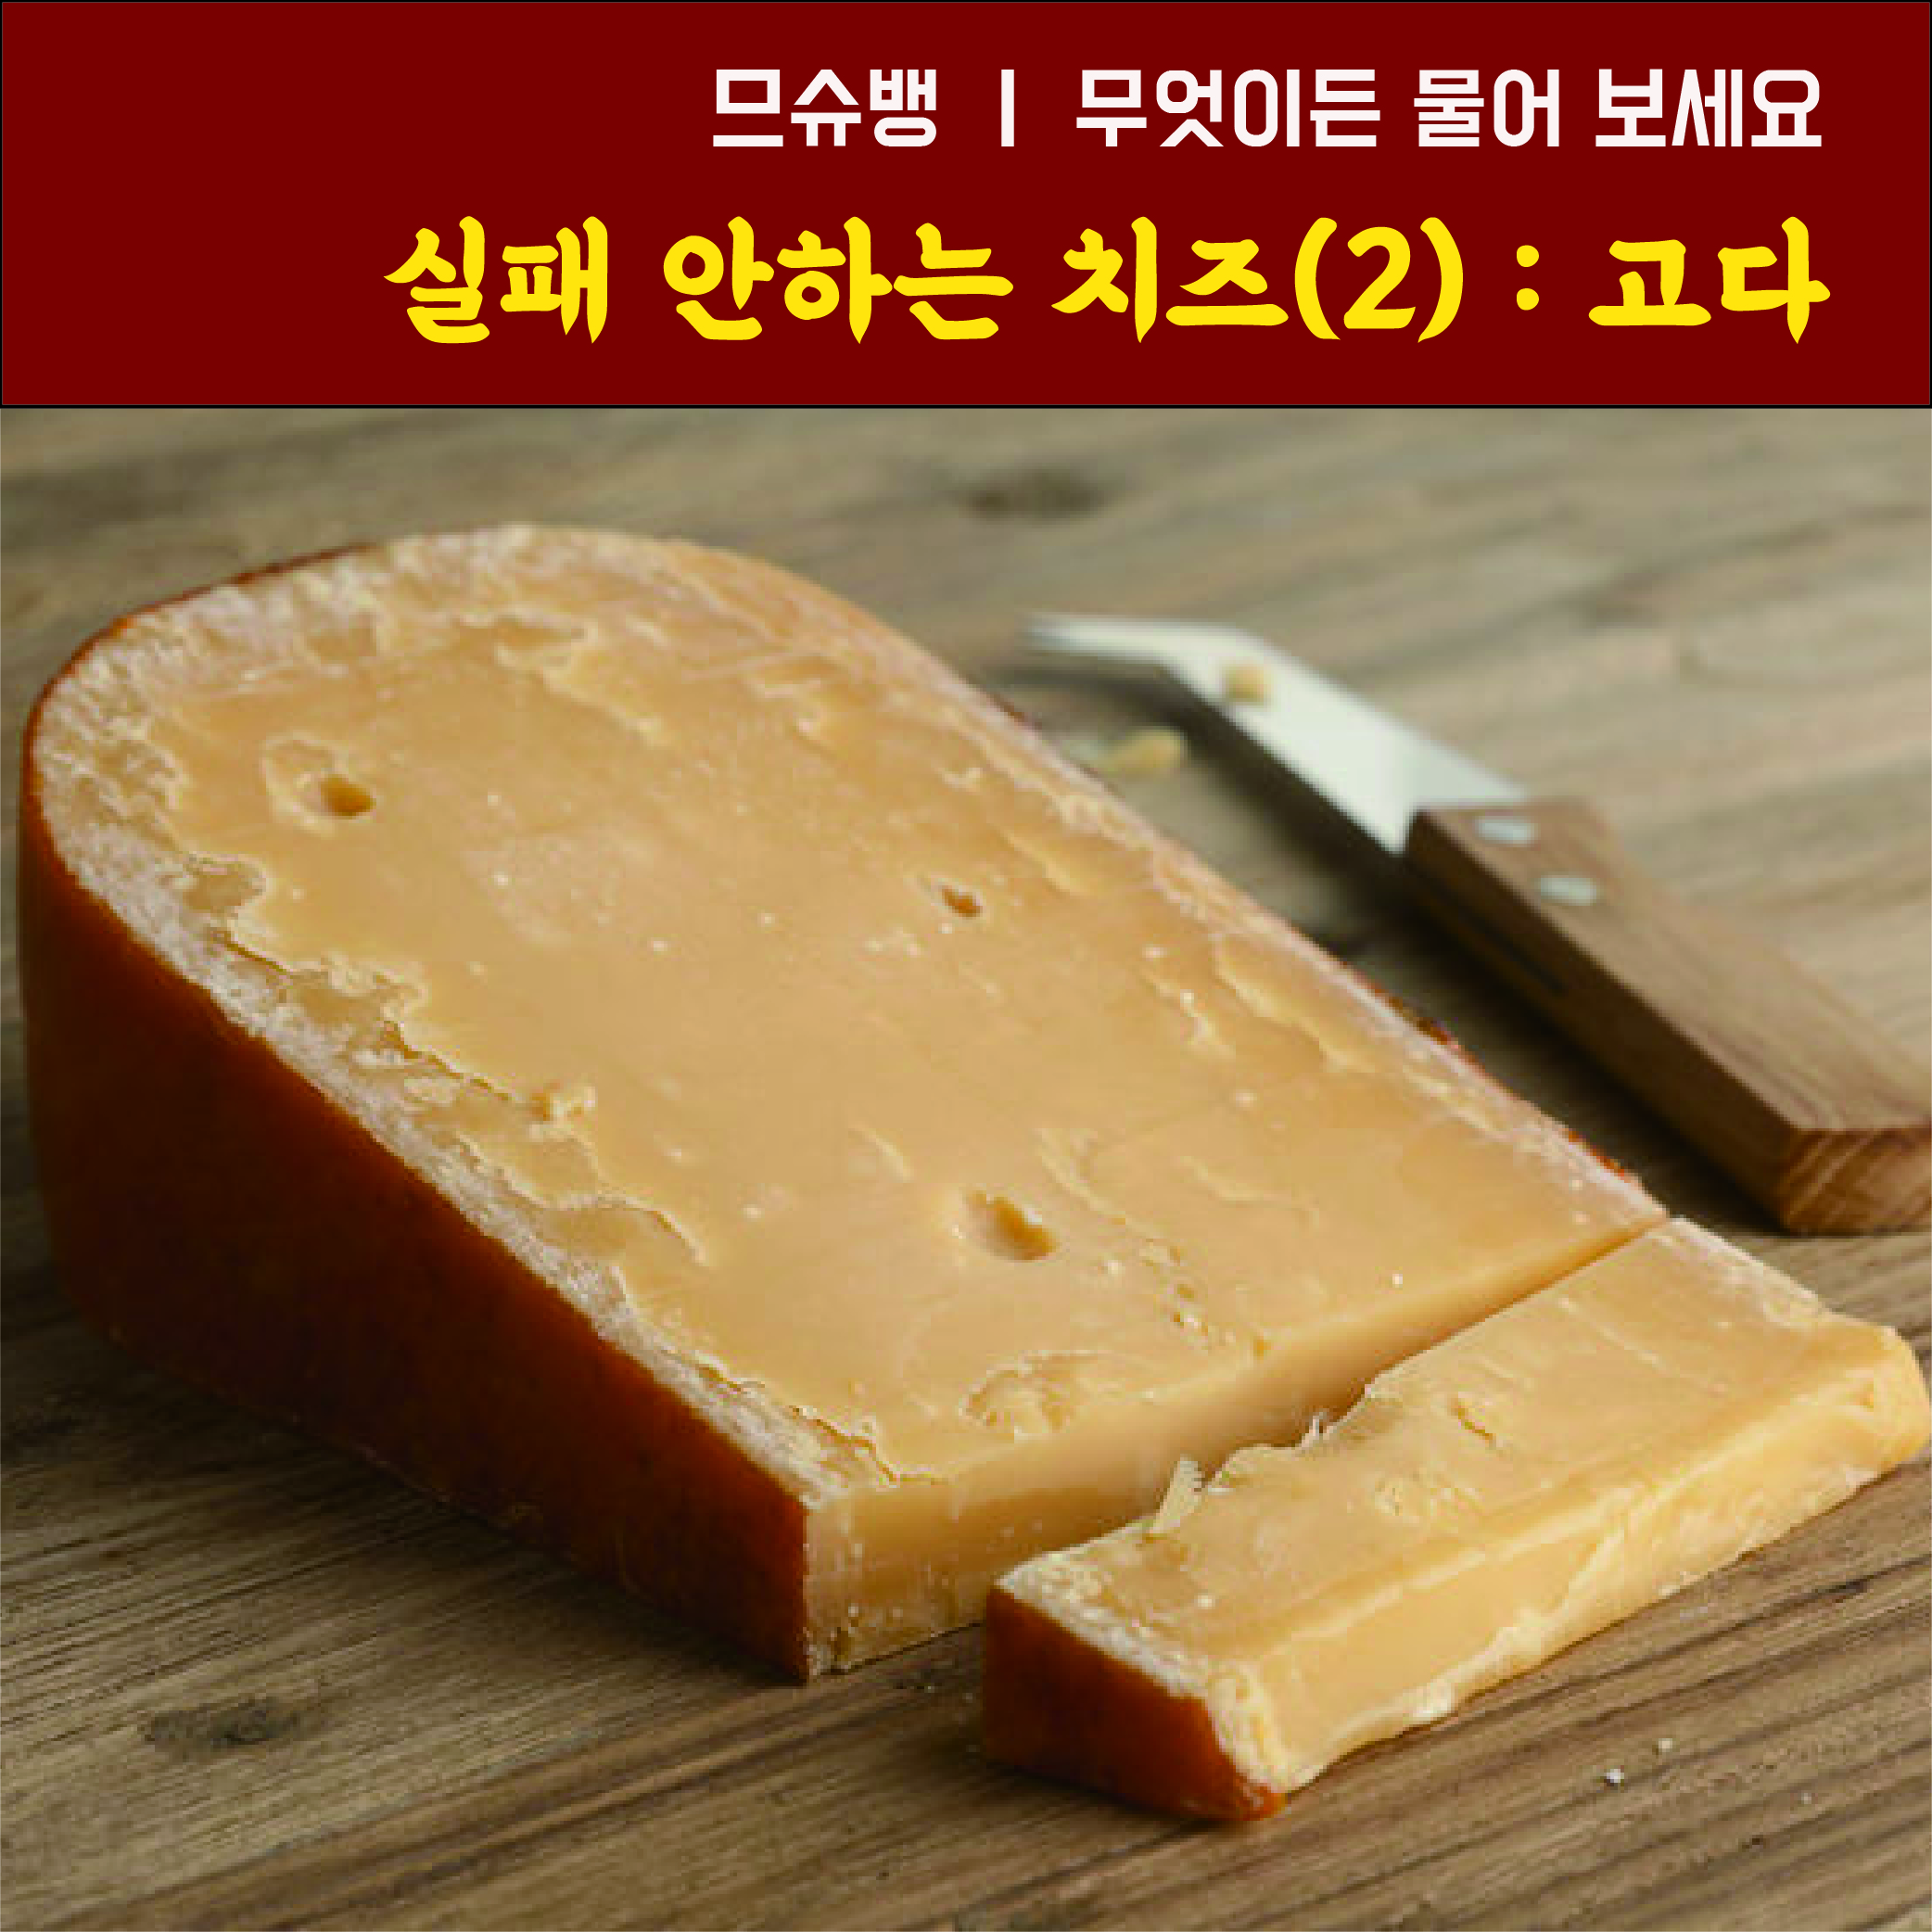 027 fromage gouda-01.jpg